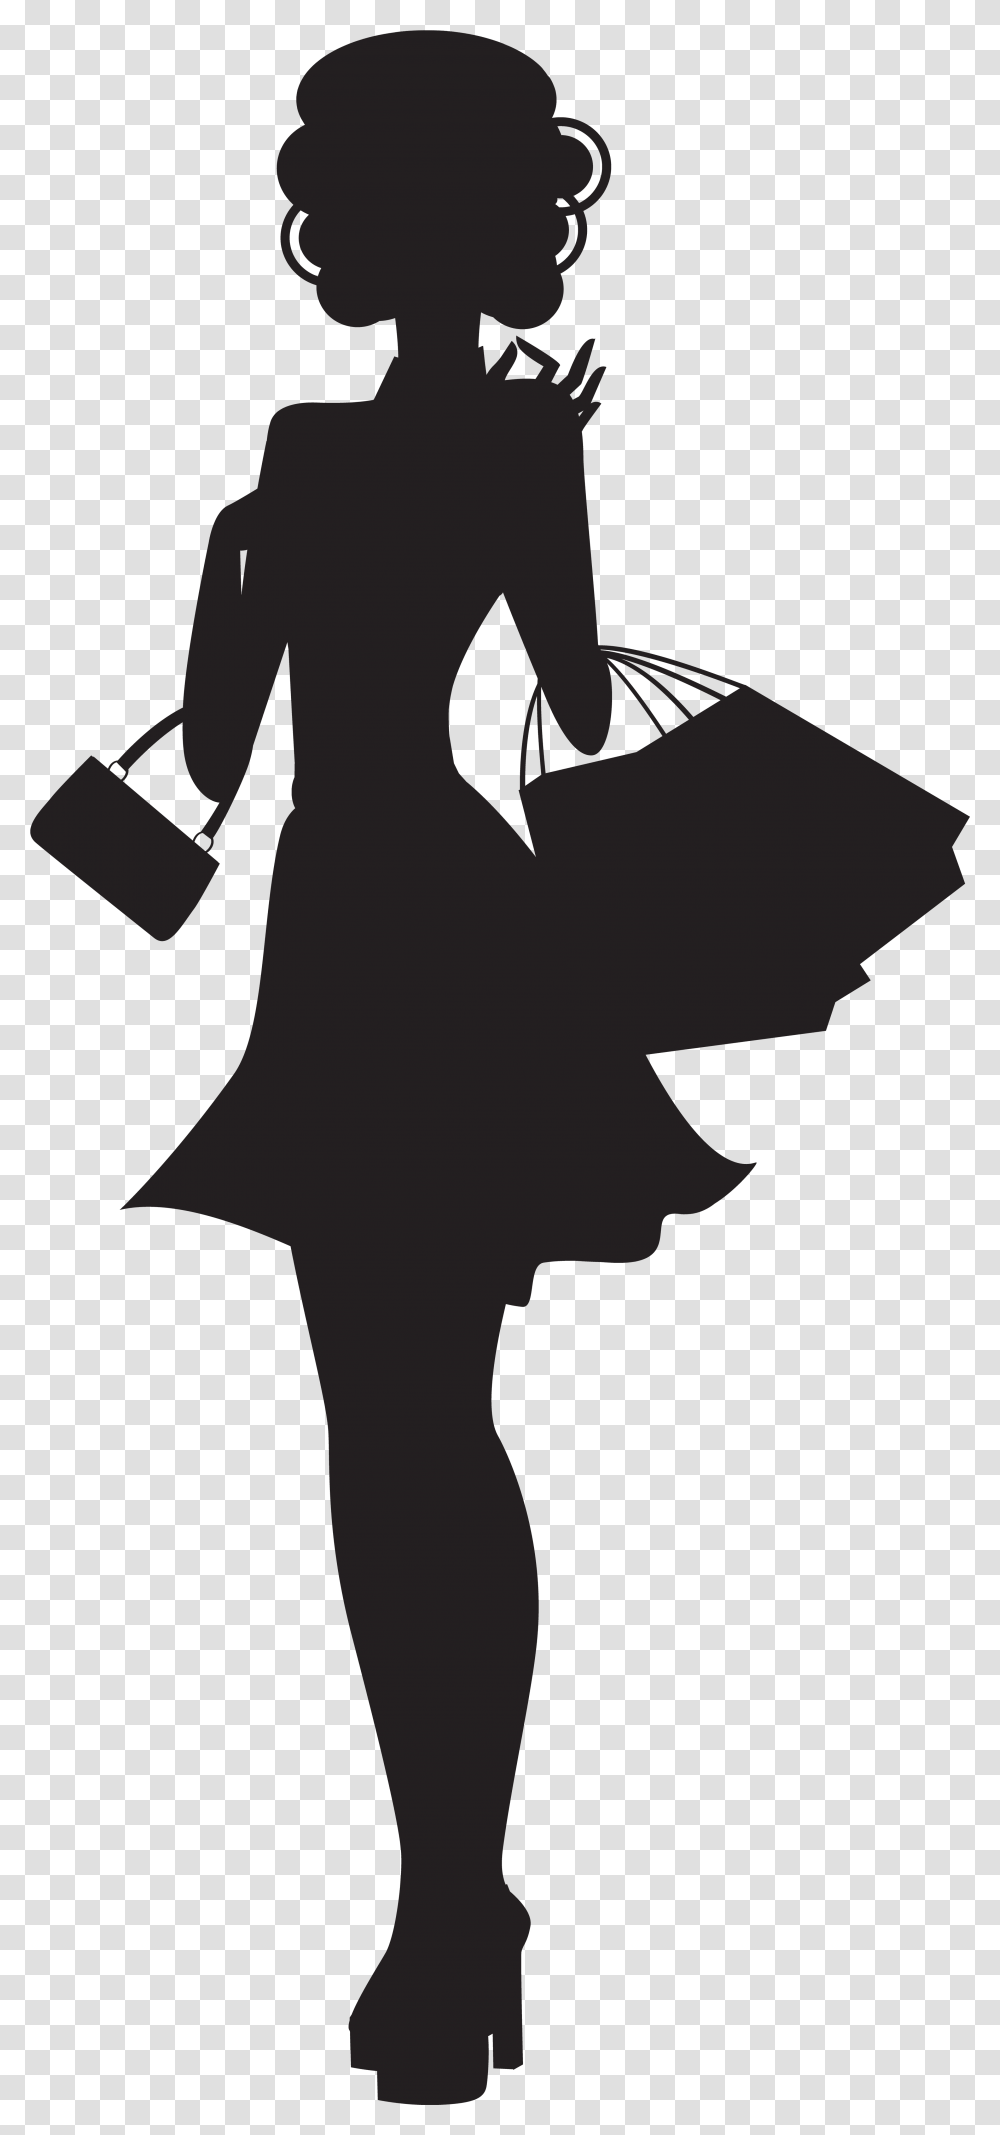 Black Woman Silhouette Shopping Girl Silhouette, Person, Human, Bag, Shopping Bag Transparent Png